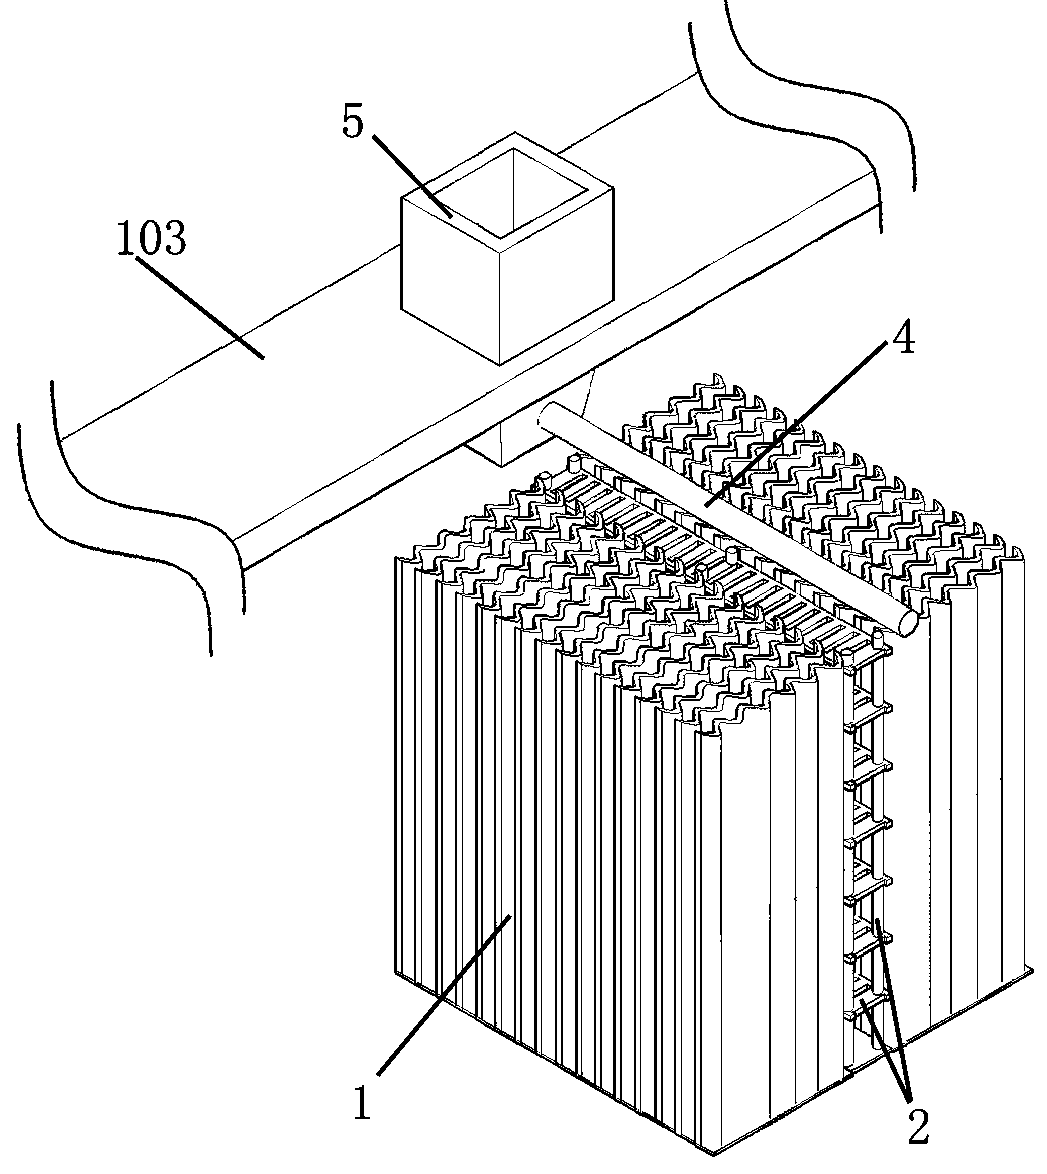 Three-dimensional feeding system for cockroach cultivation